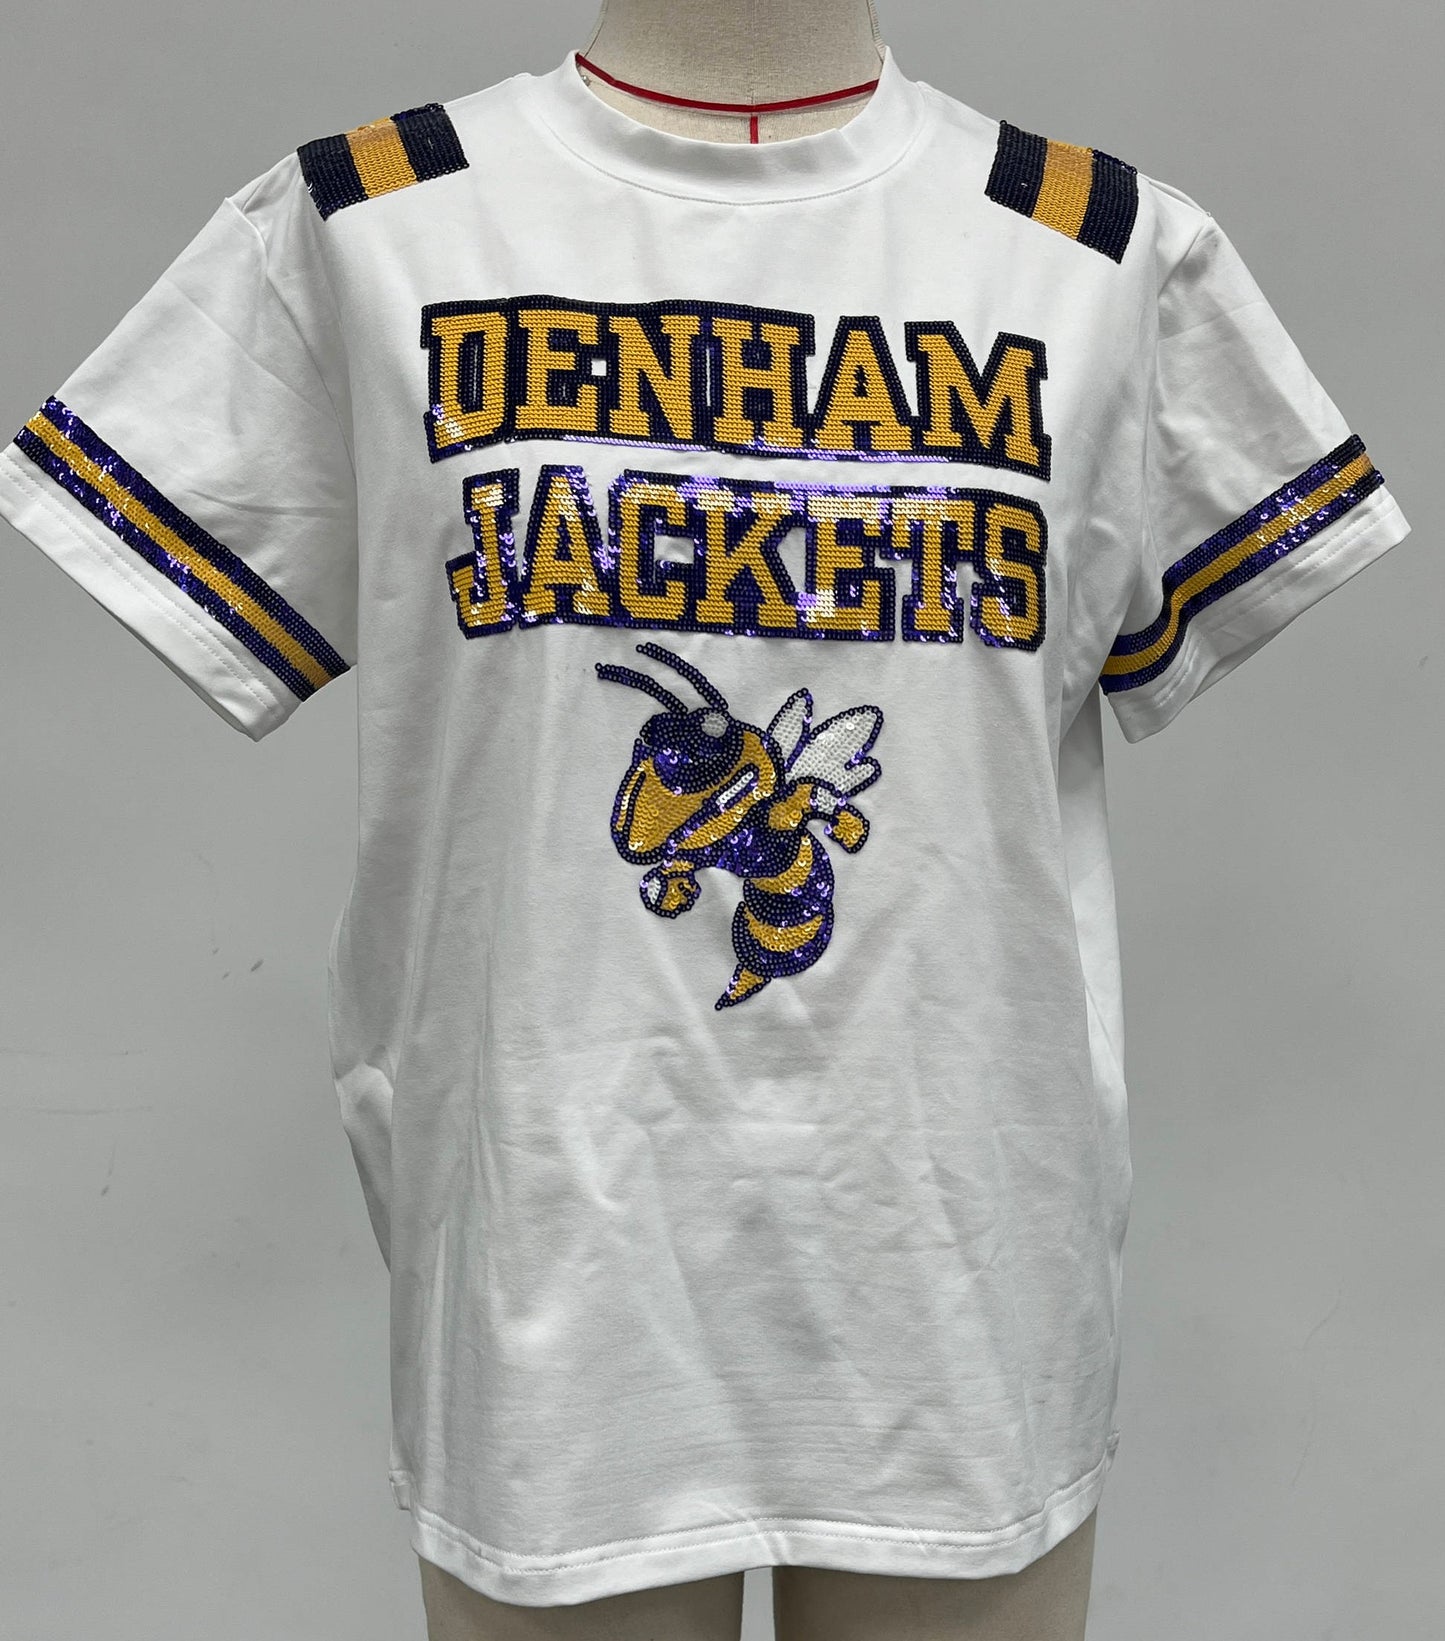 Denham Jackets | Women's Sequin Jersey Tee (White)